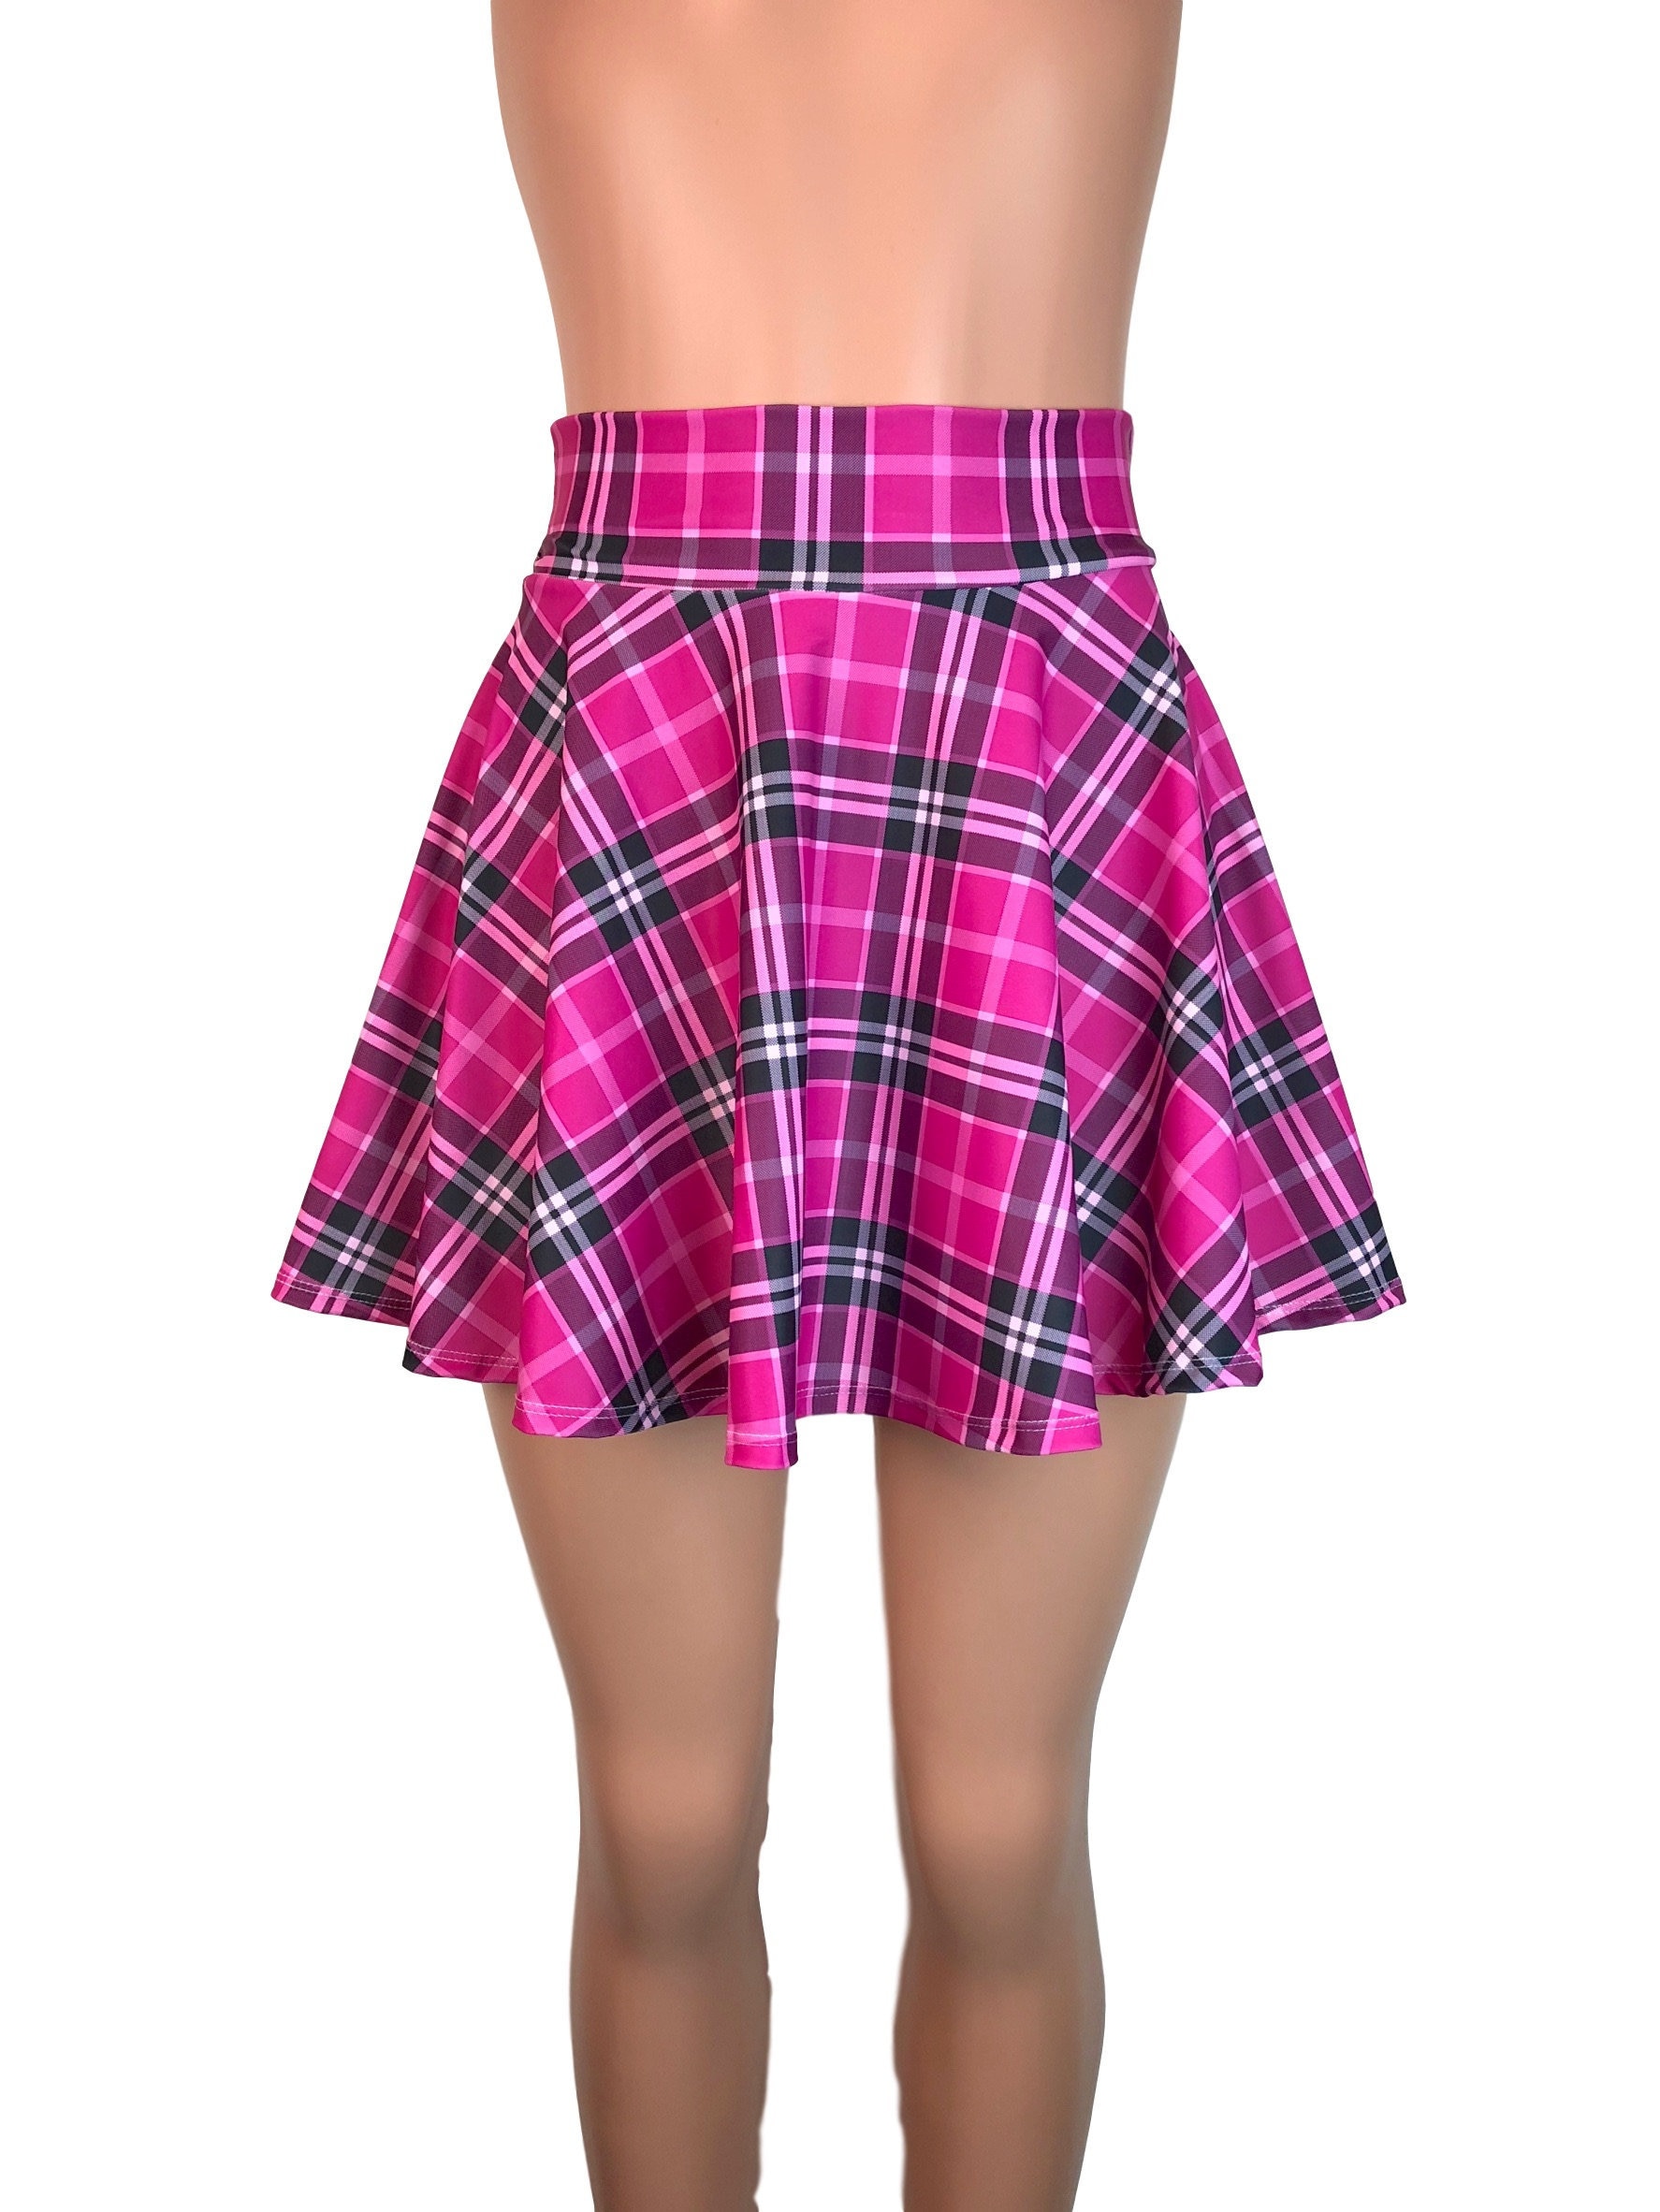 Pink Plaid High Waisted Skater Skirt Clubwear, Rave Wear, Mini